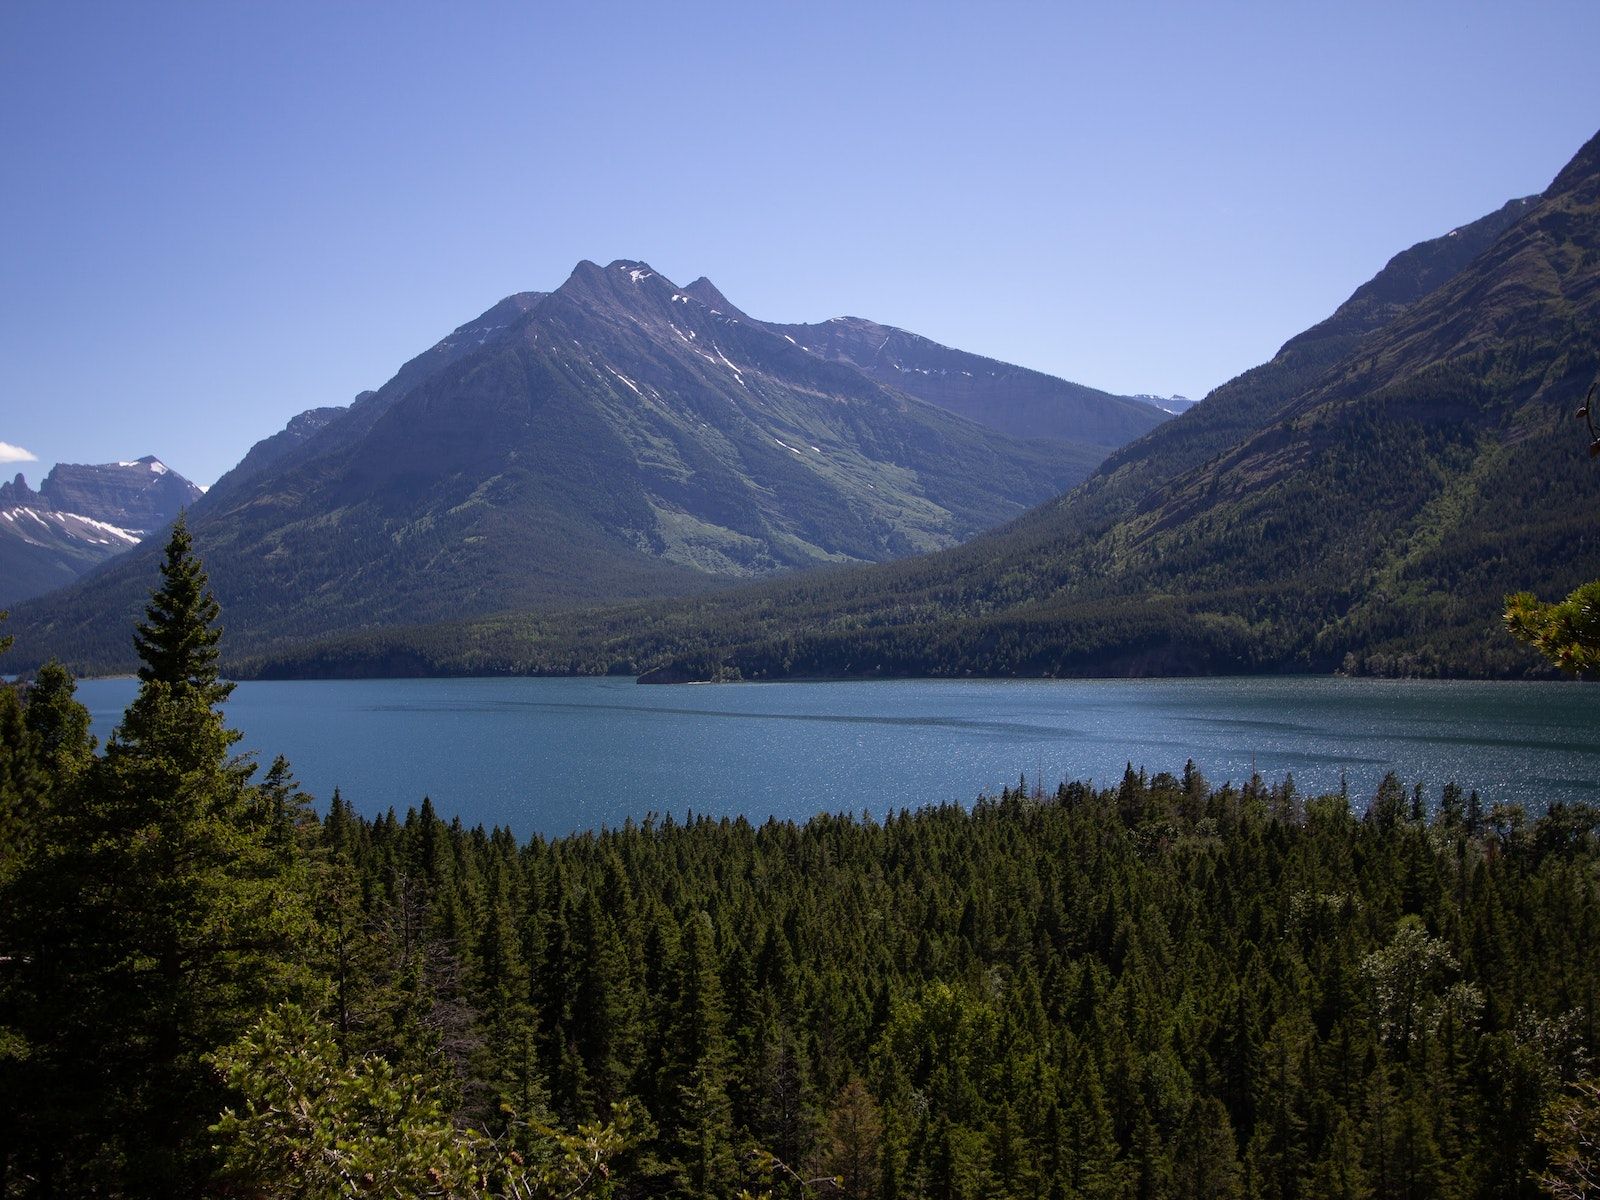 Mountain in British Columbia overlooking a lake